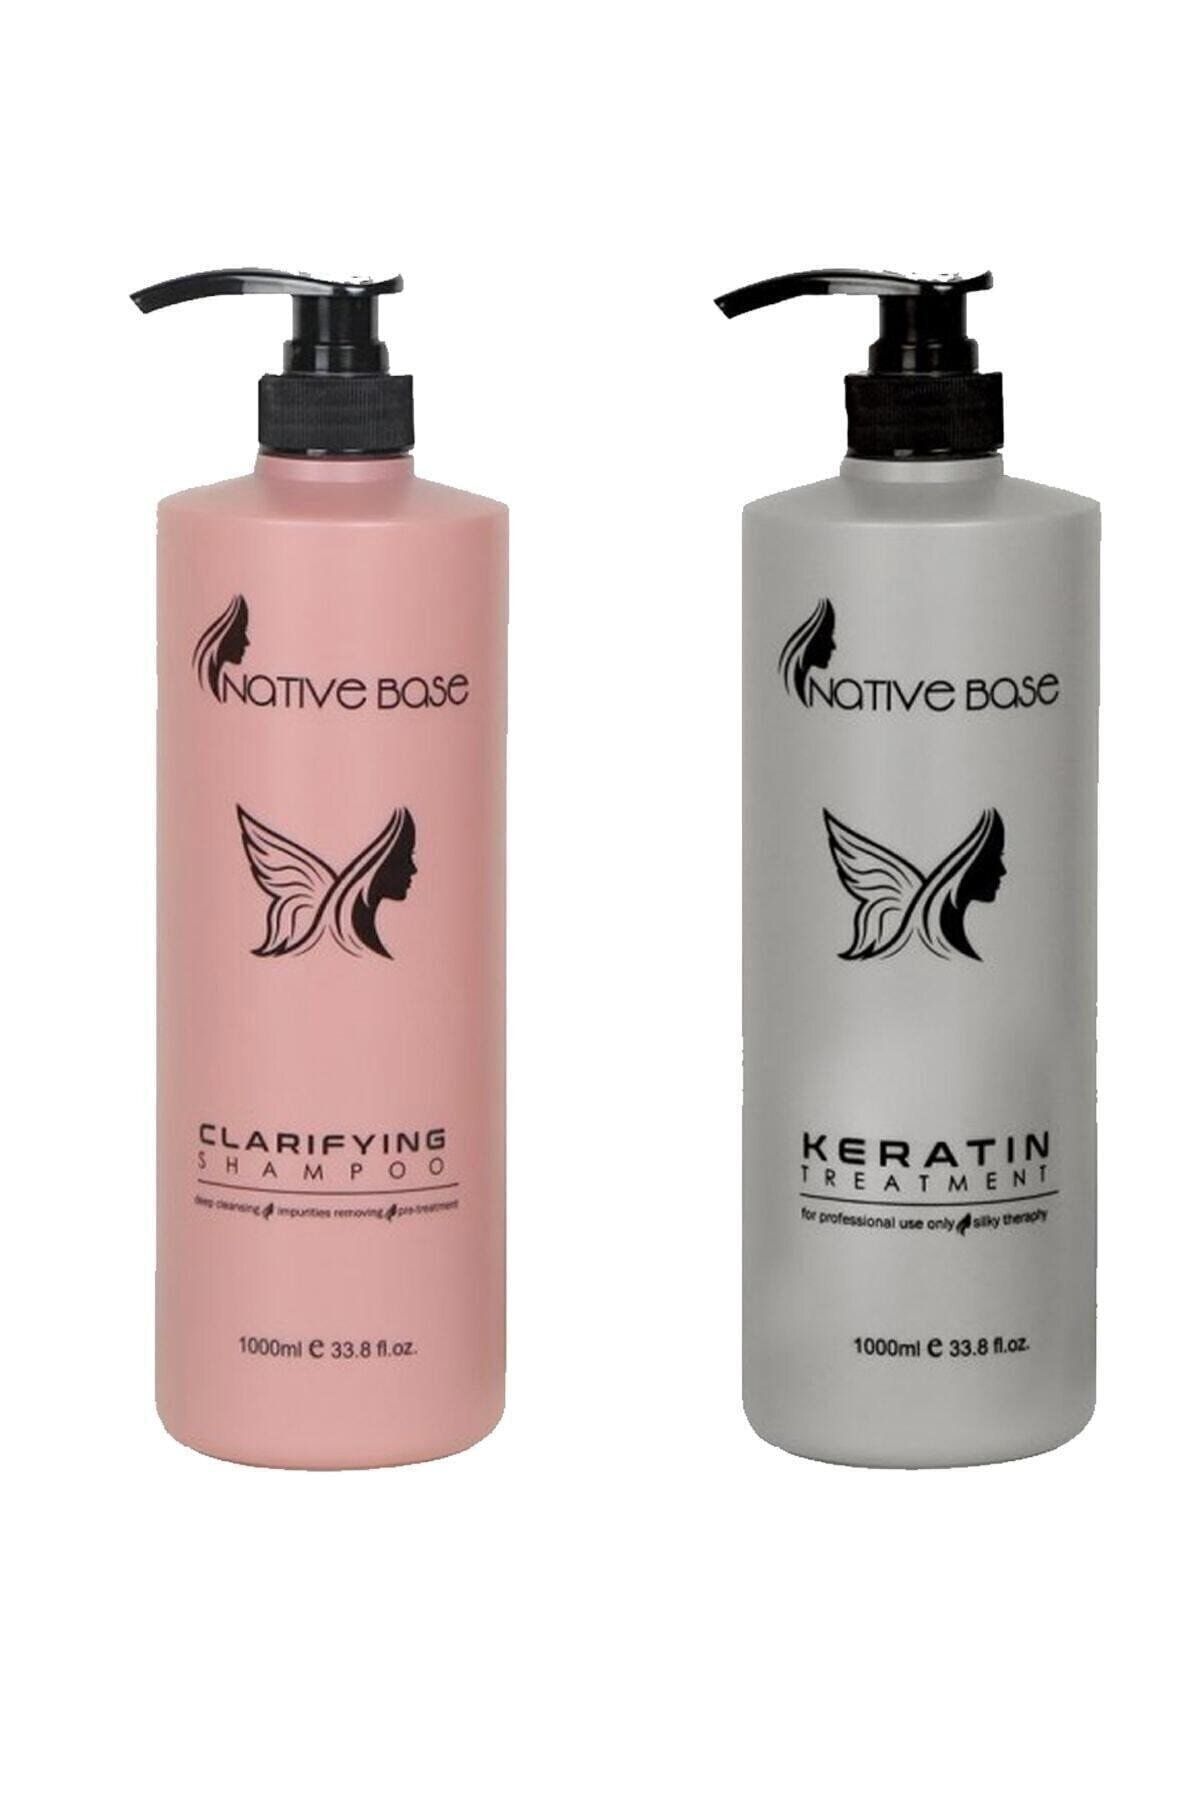 Native Base Clarifying Shampoo Keratin Treatment 1000ml Set